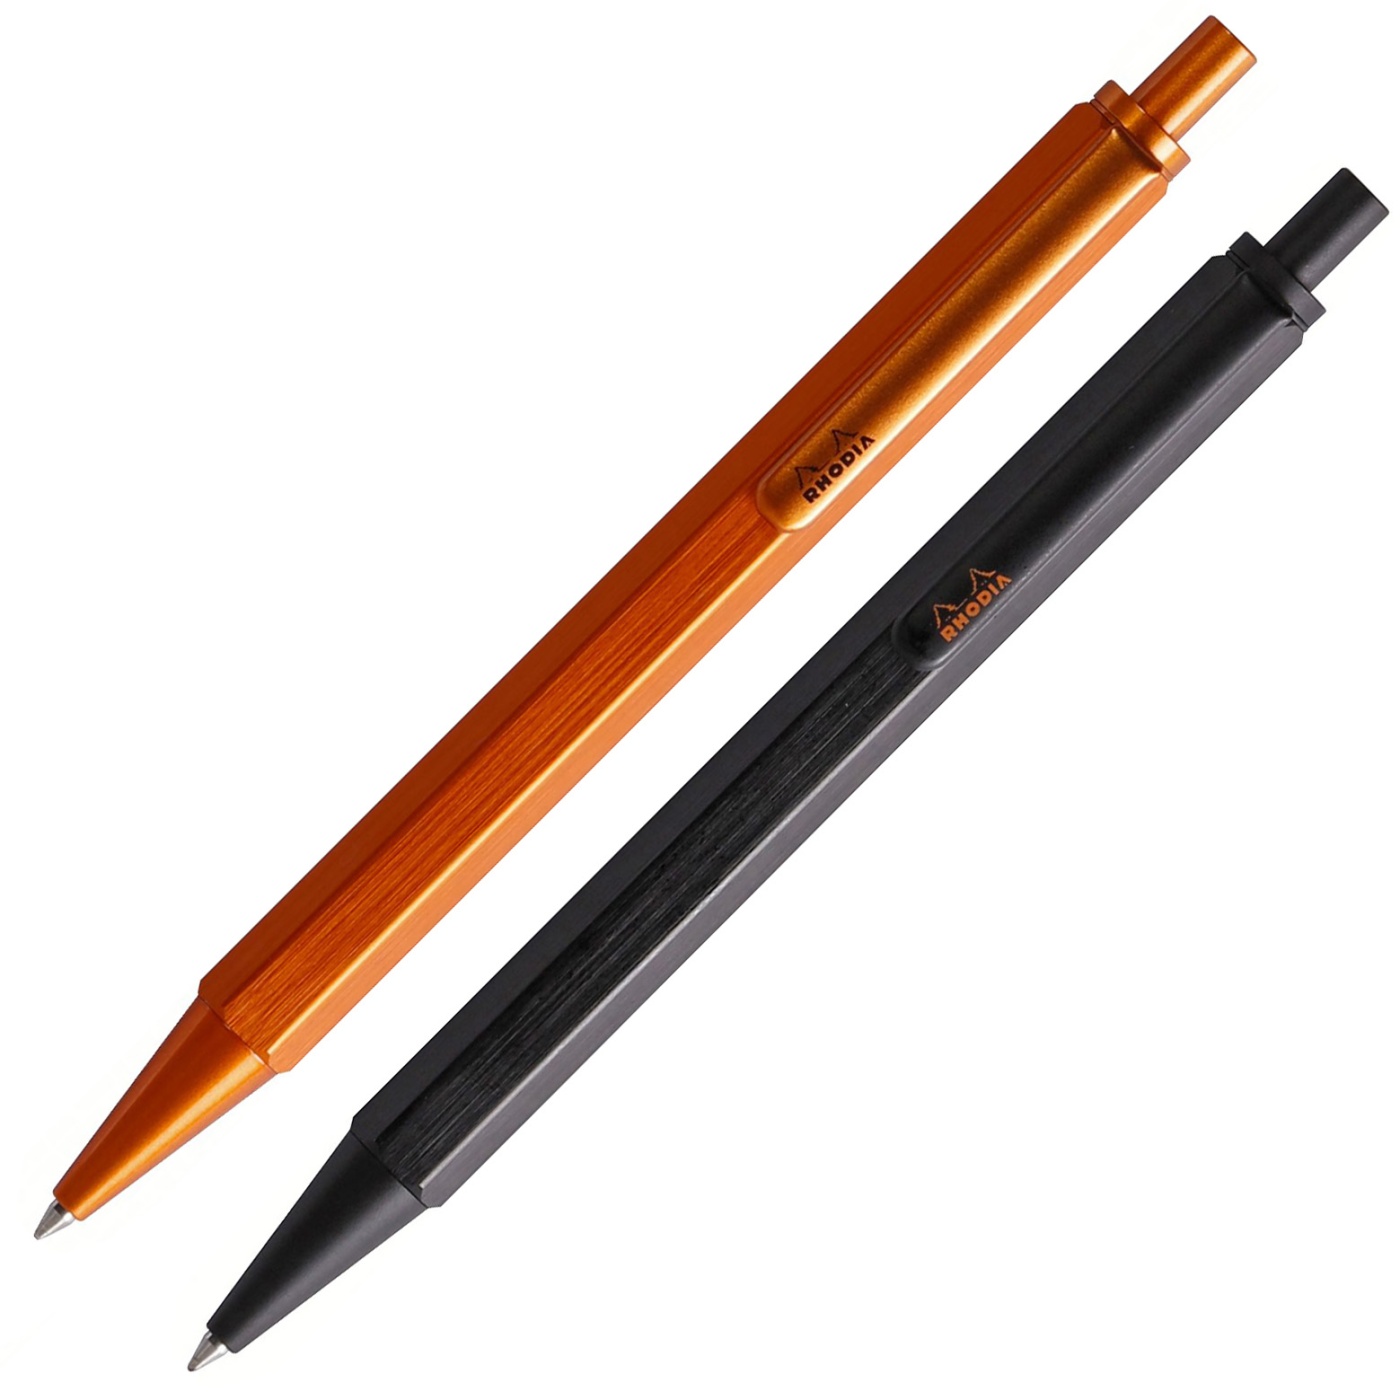 ScRipt Ballpoint Pen in the group Pens / Fine Writing / Ballpoint Pens at Pen Store (110391_r)